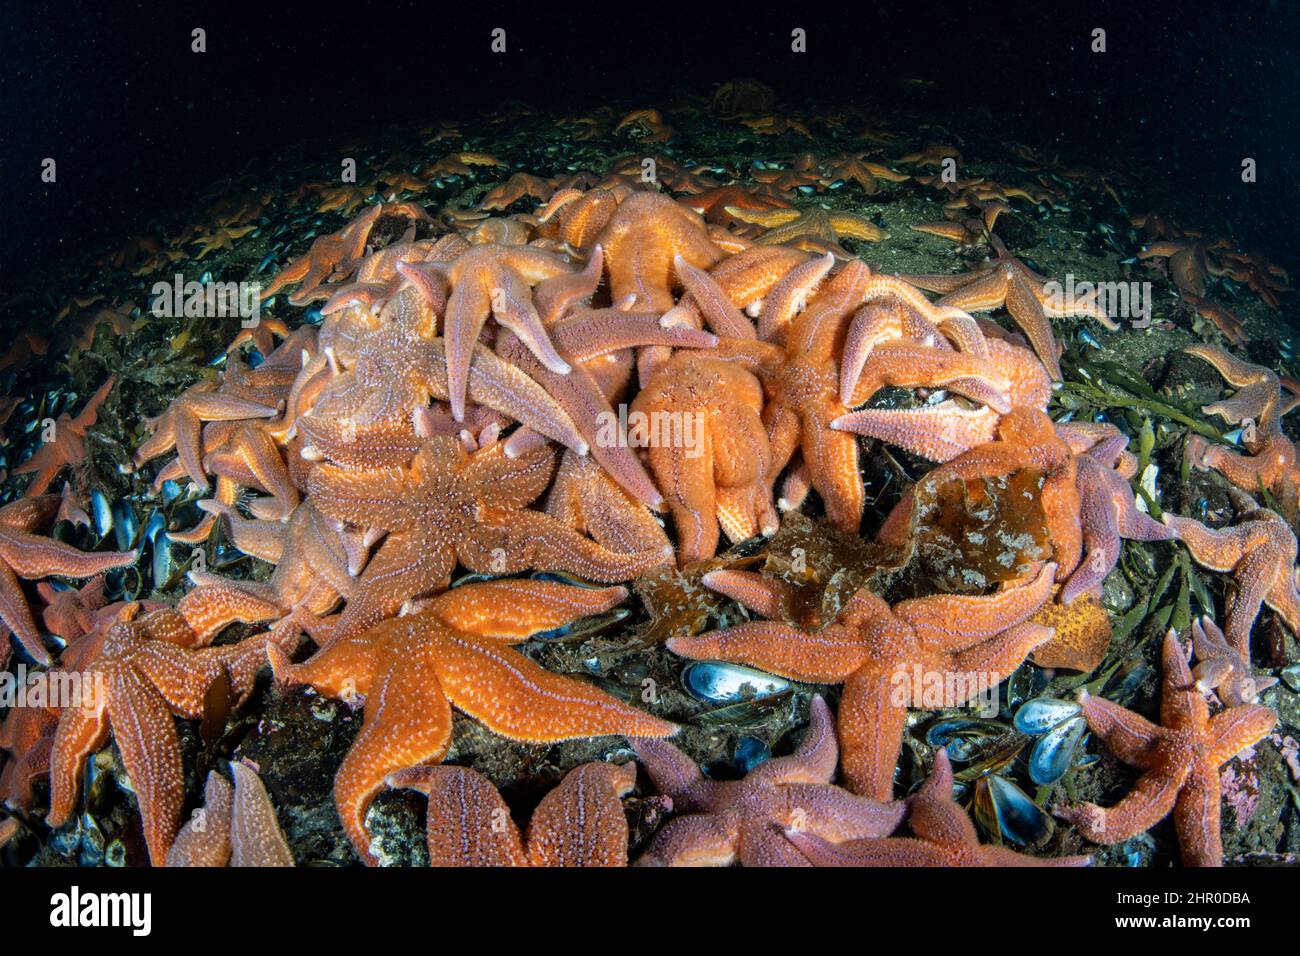 Several starfish (Henricia sp.) feeding on mussels. Trondheimfjord, Norway, North Atlantic Ocean. Stock Photo